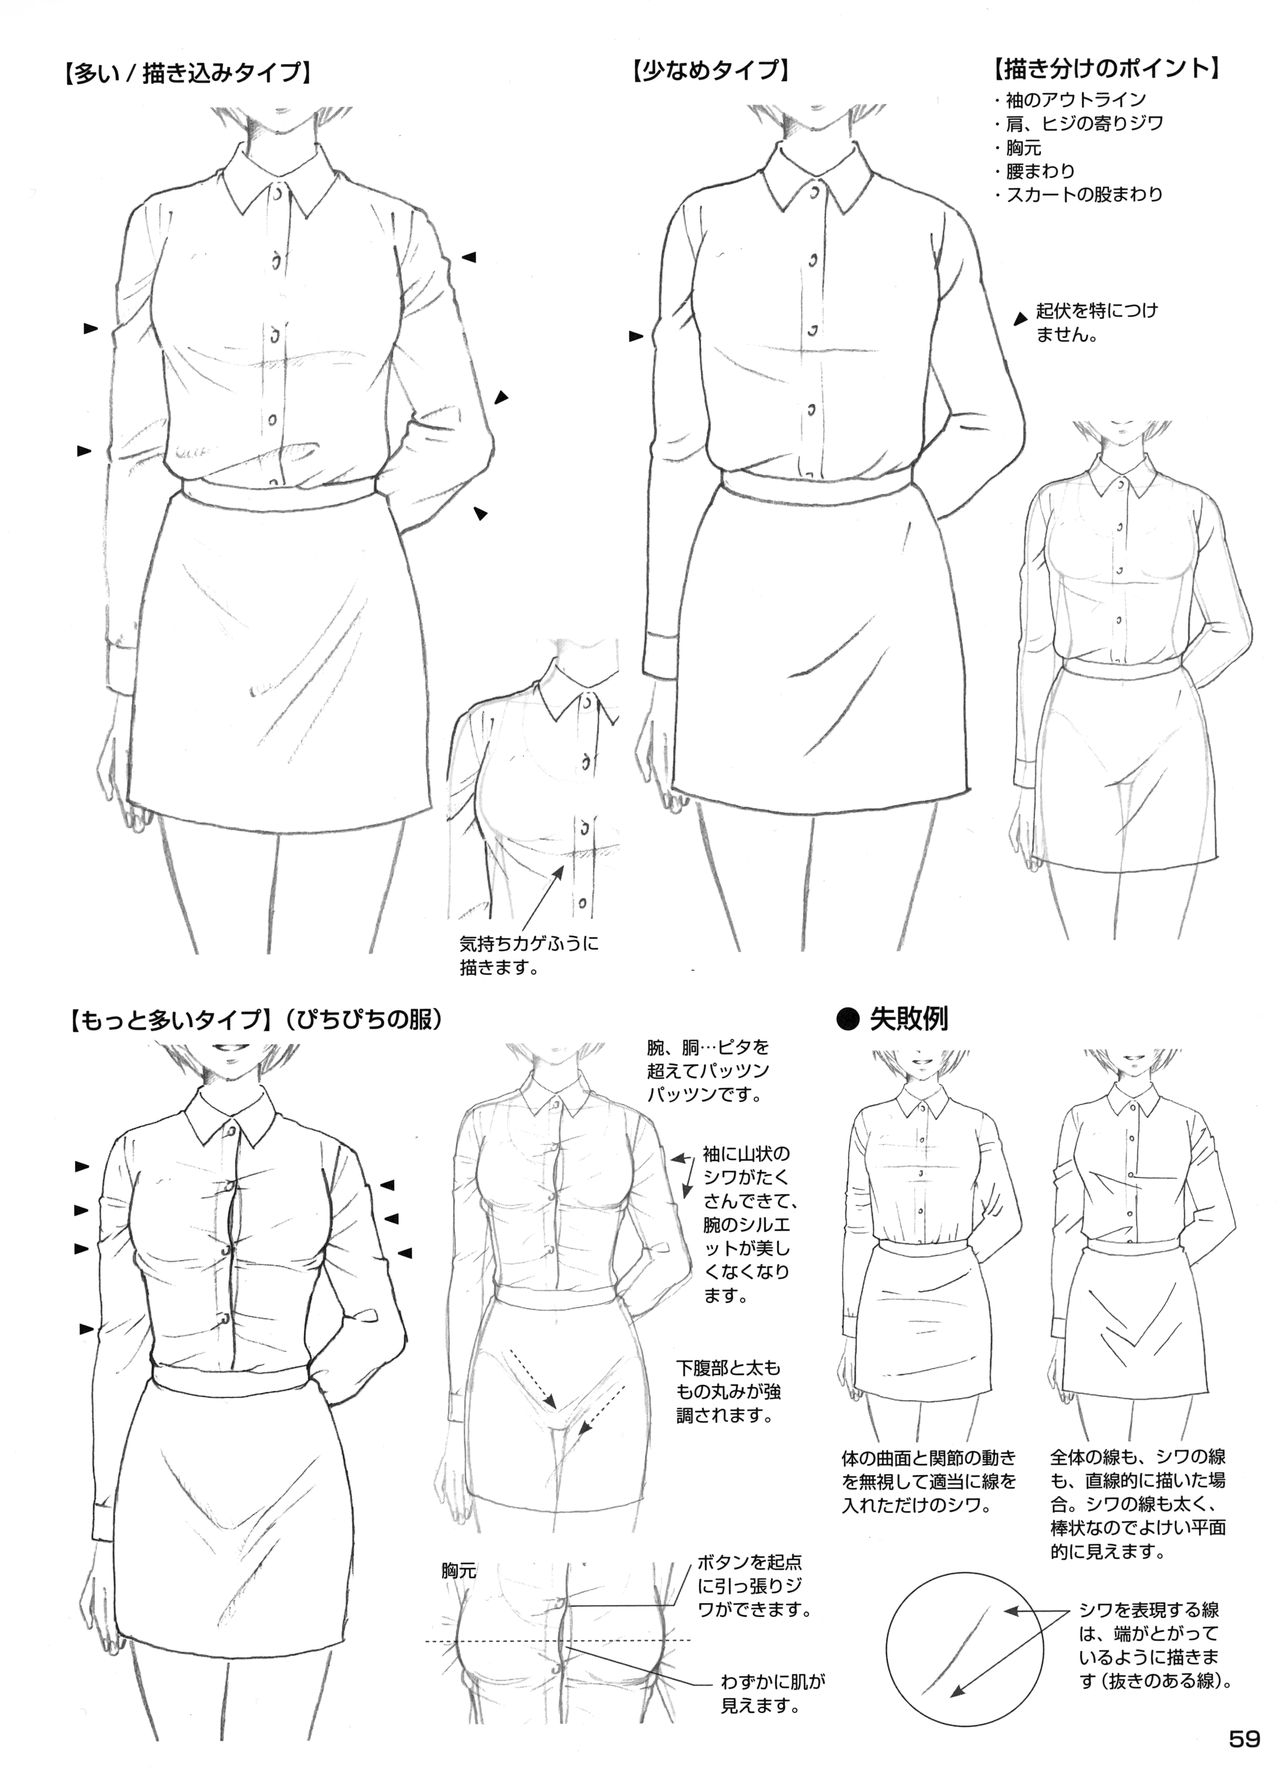 Manga no Kiso Dessin - Onnanoko Costume hen 59